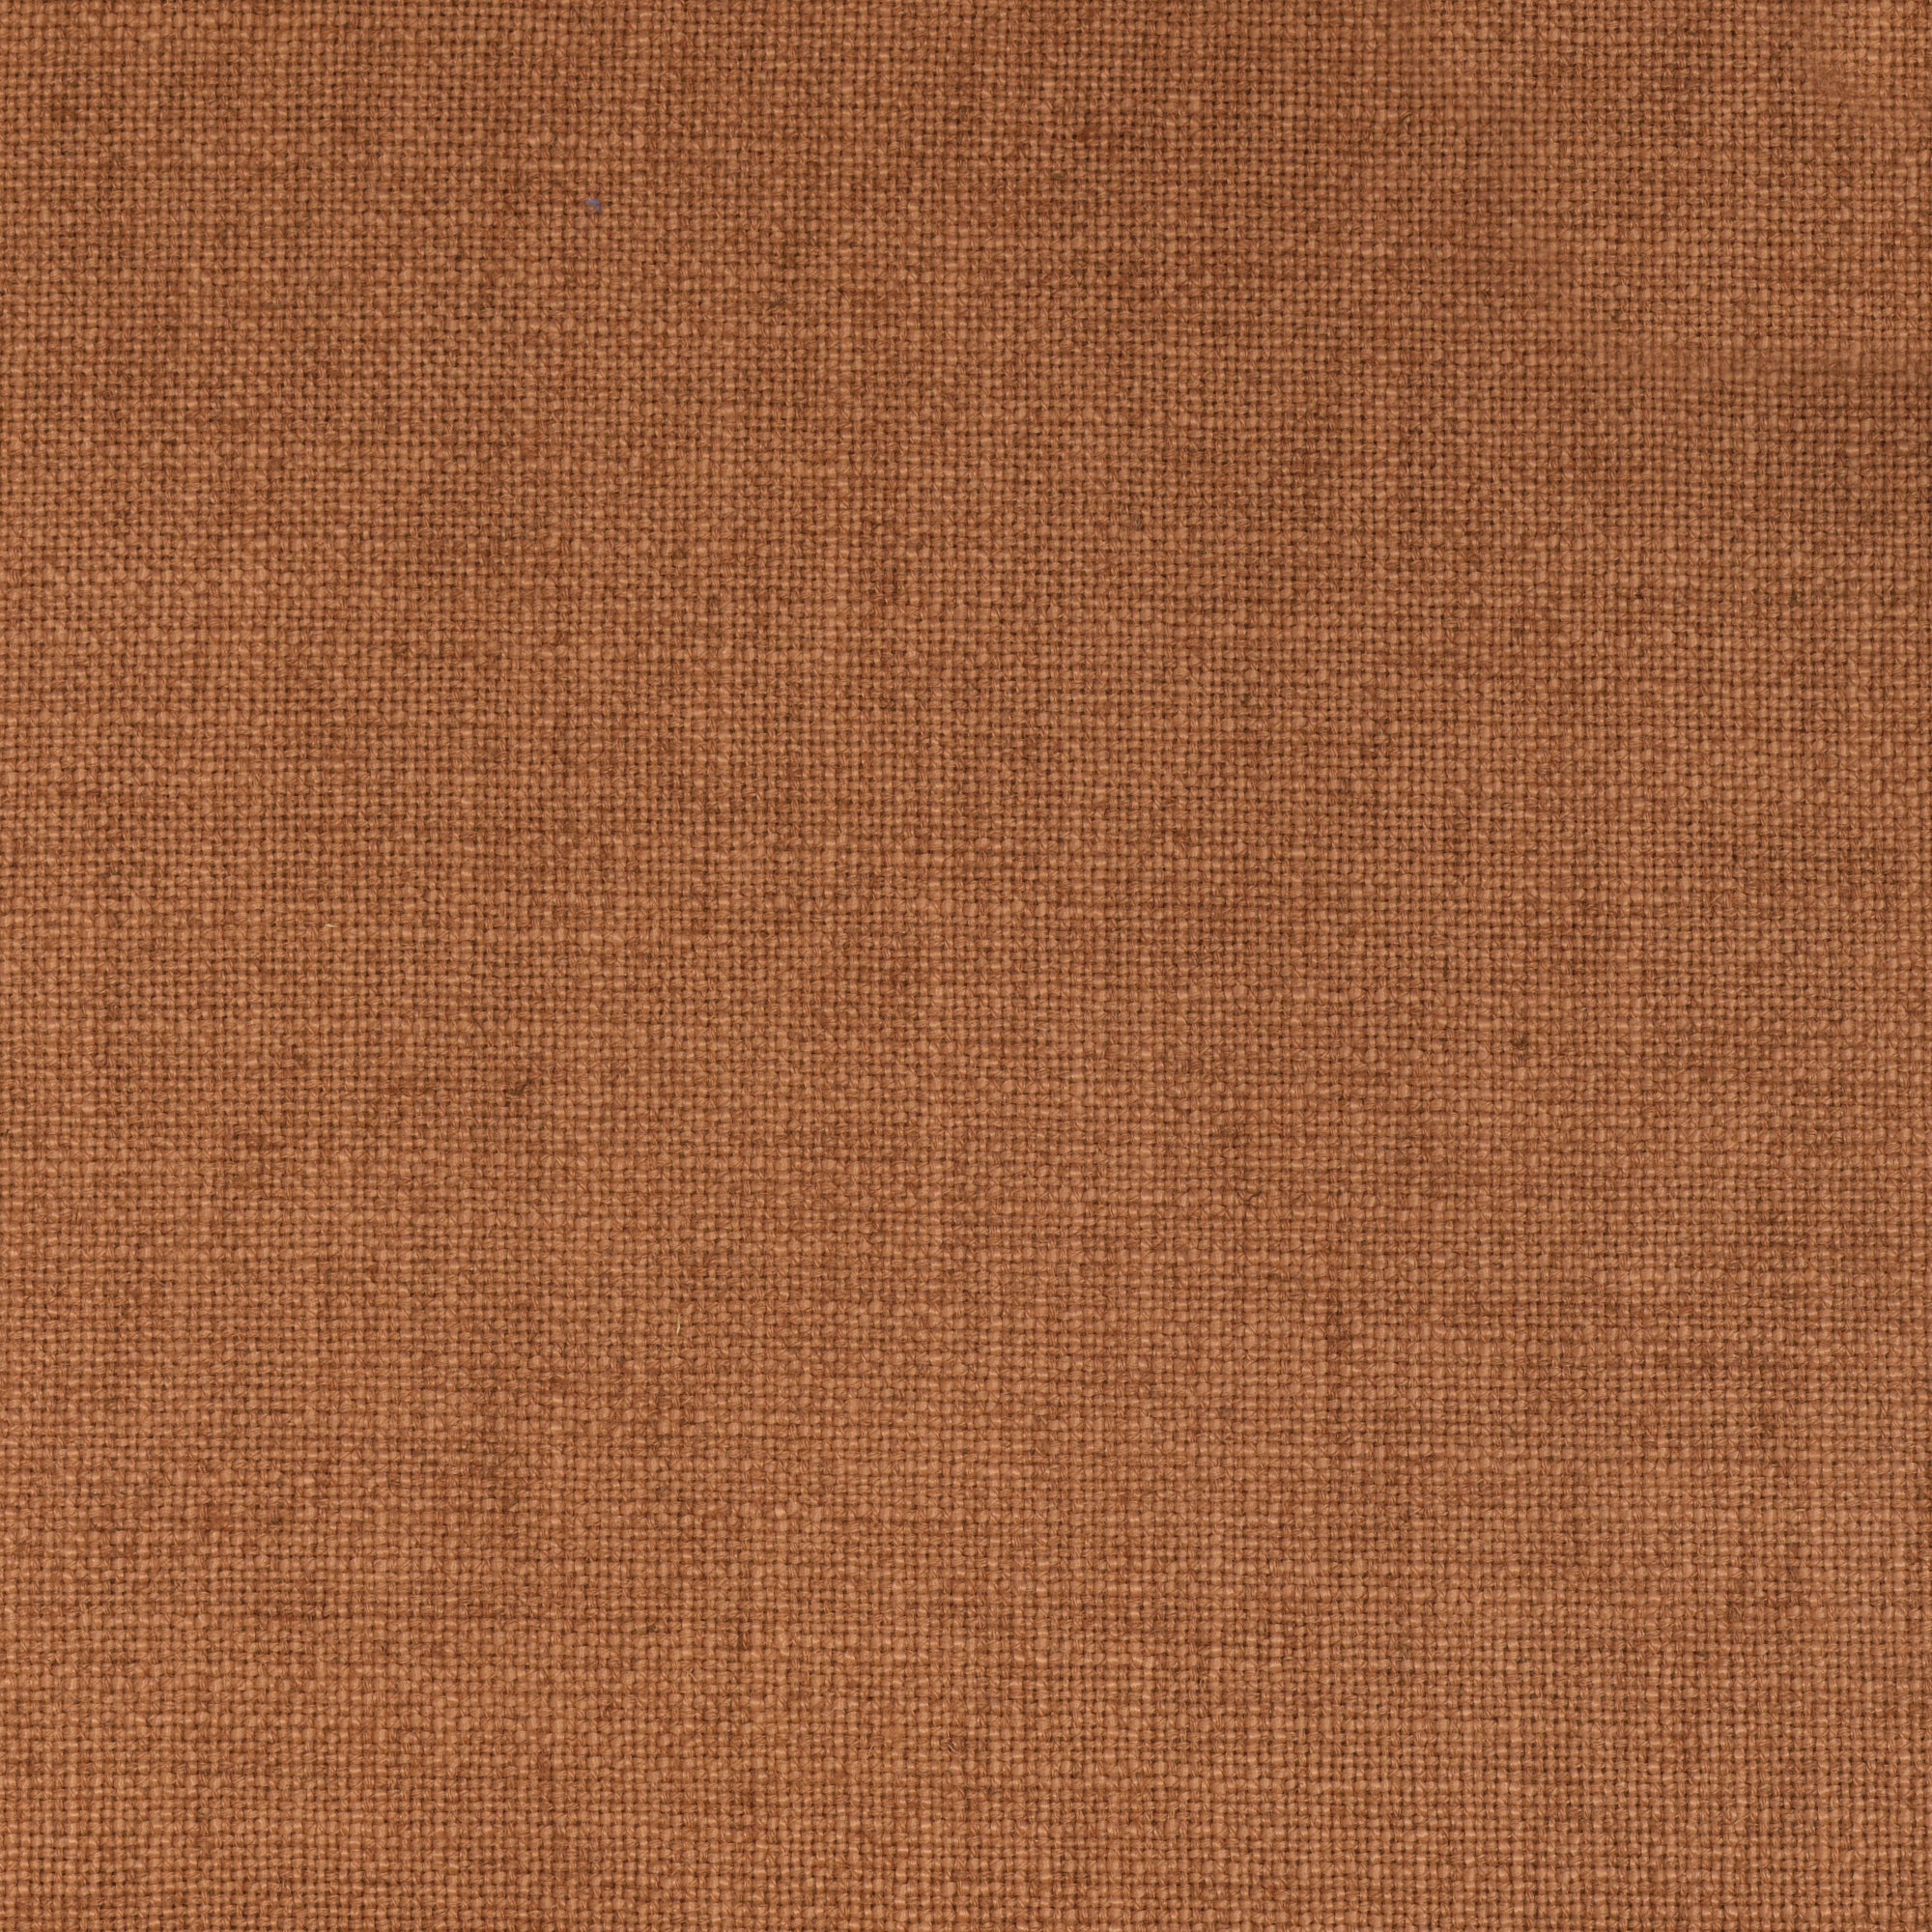 Sandstone Fabric -  Canada